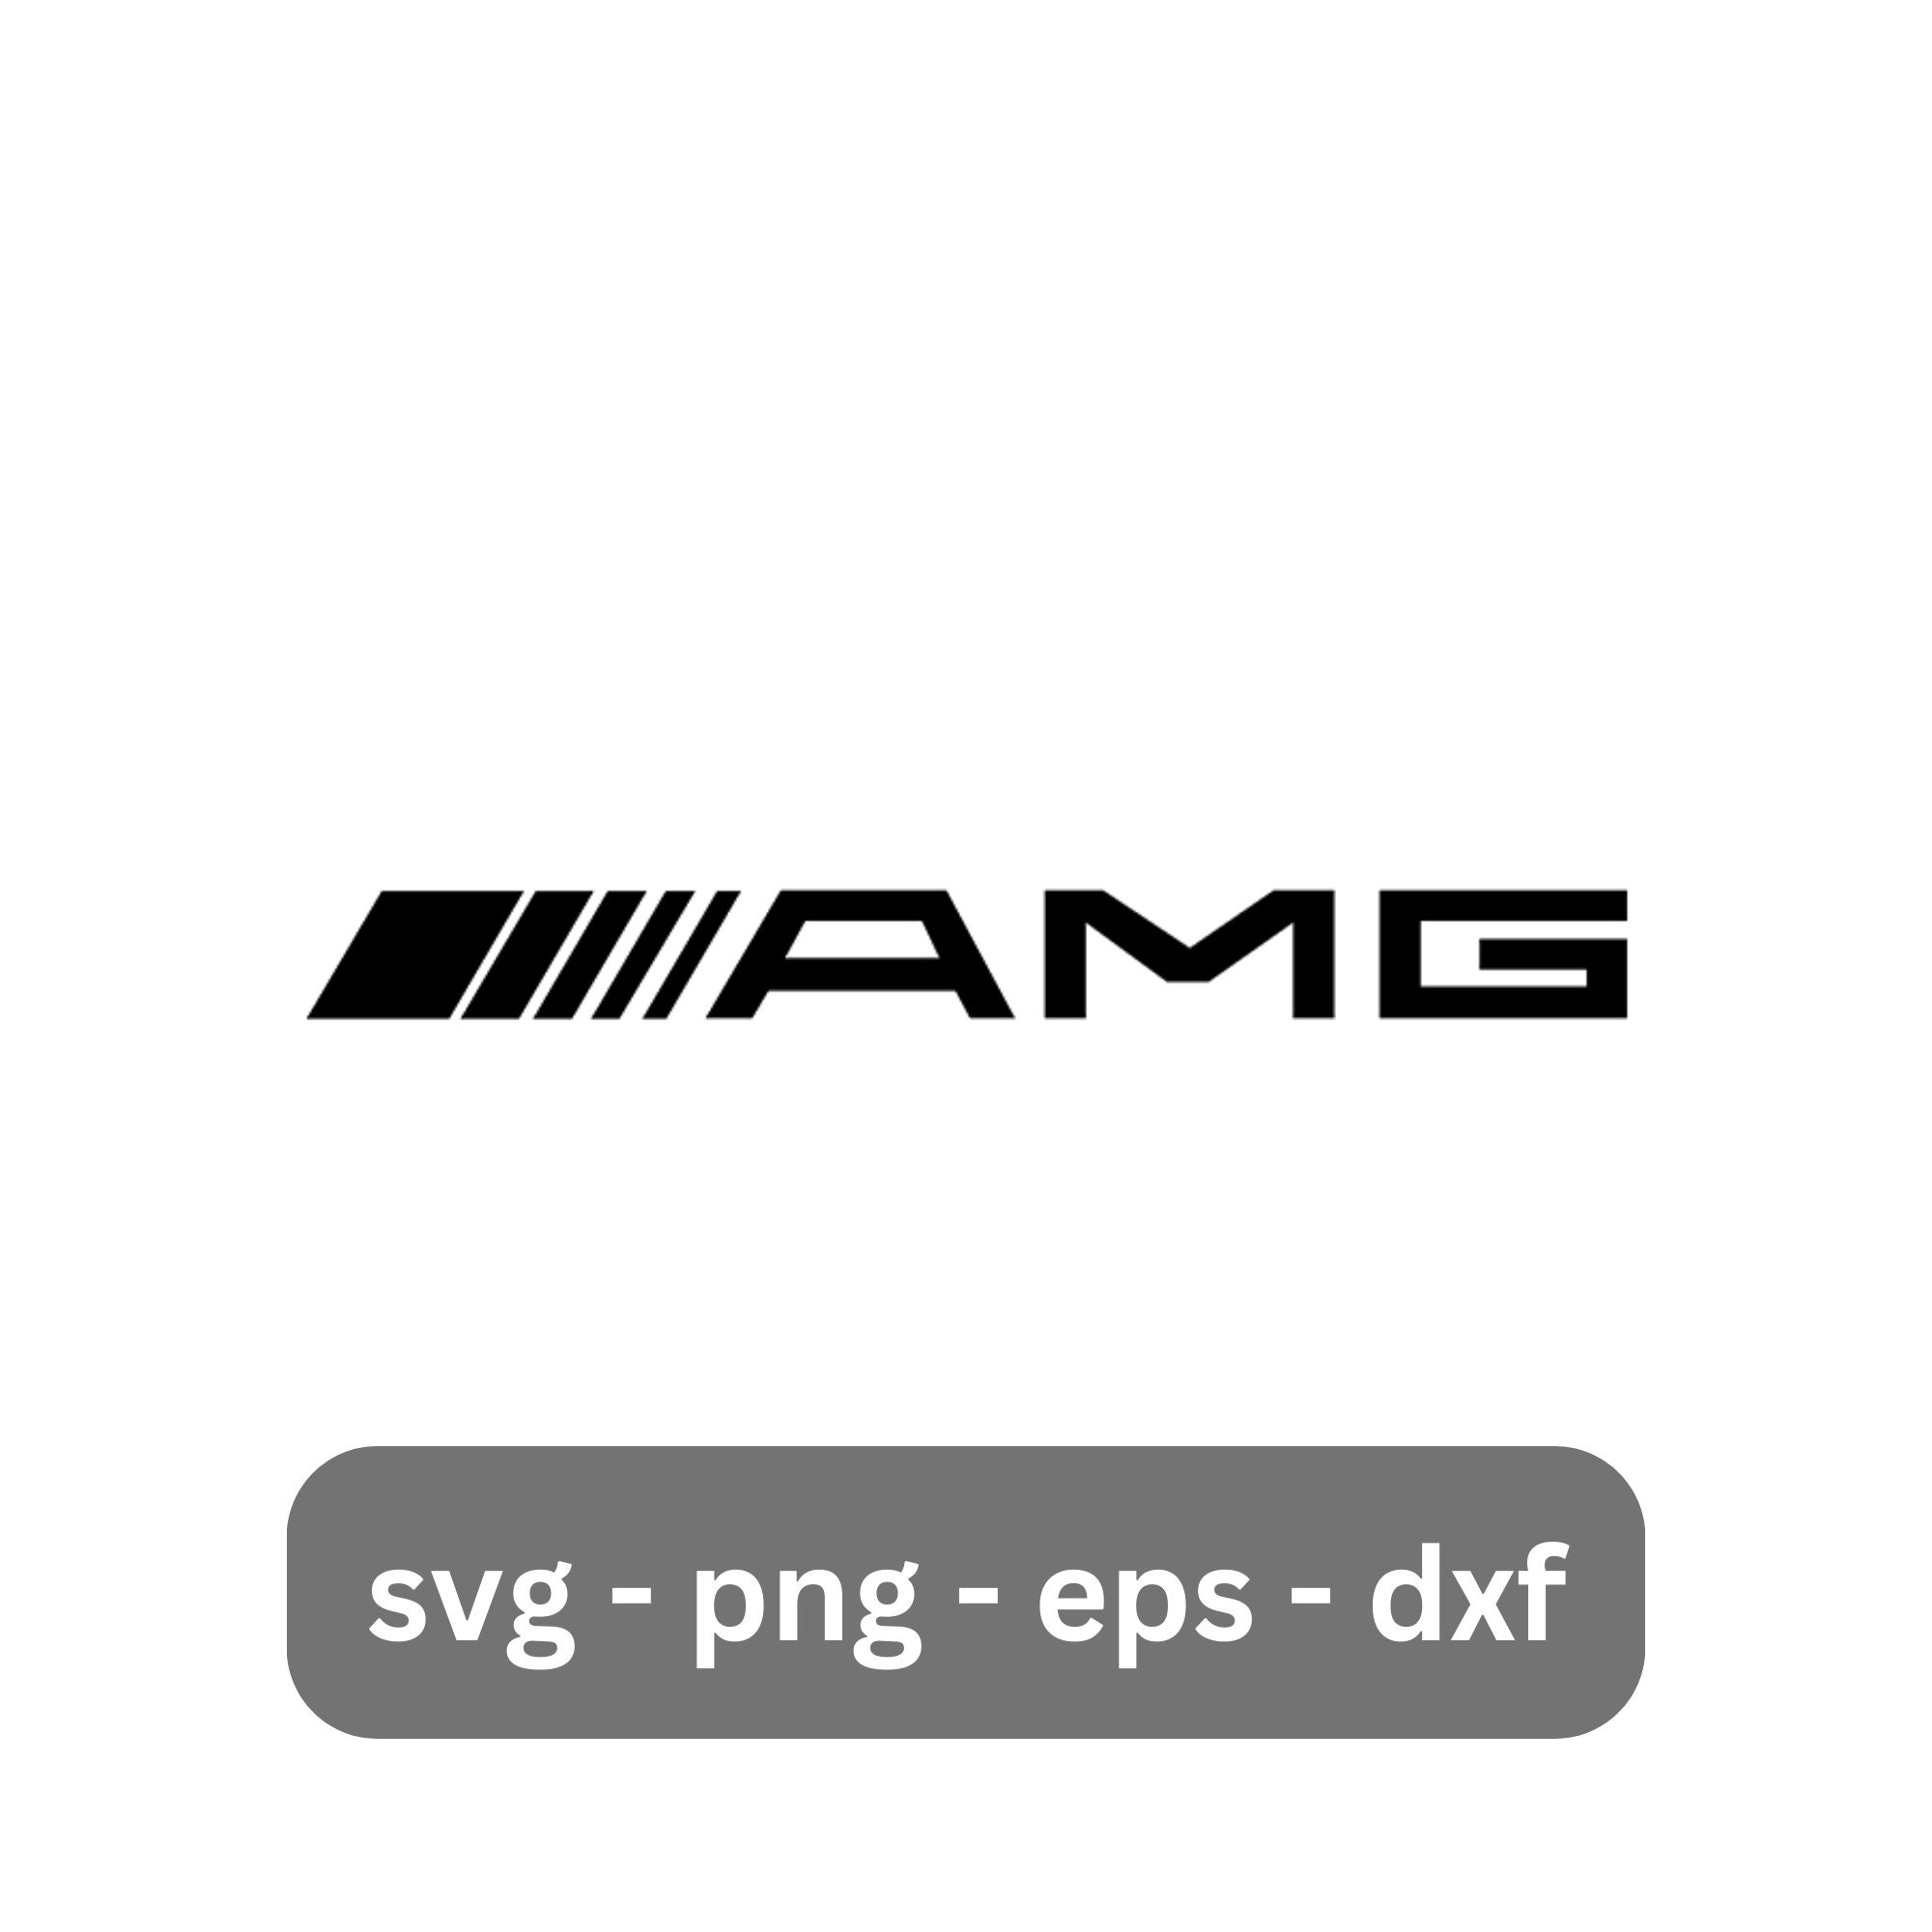 AMG LOGO  Amg logo, Amg, Merc benz